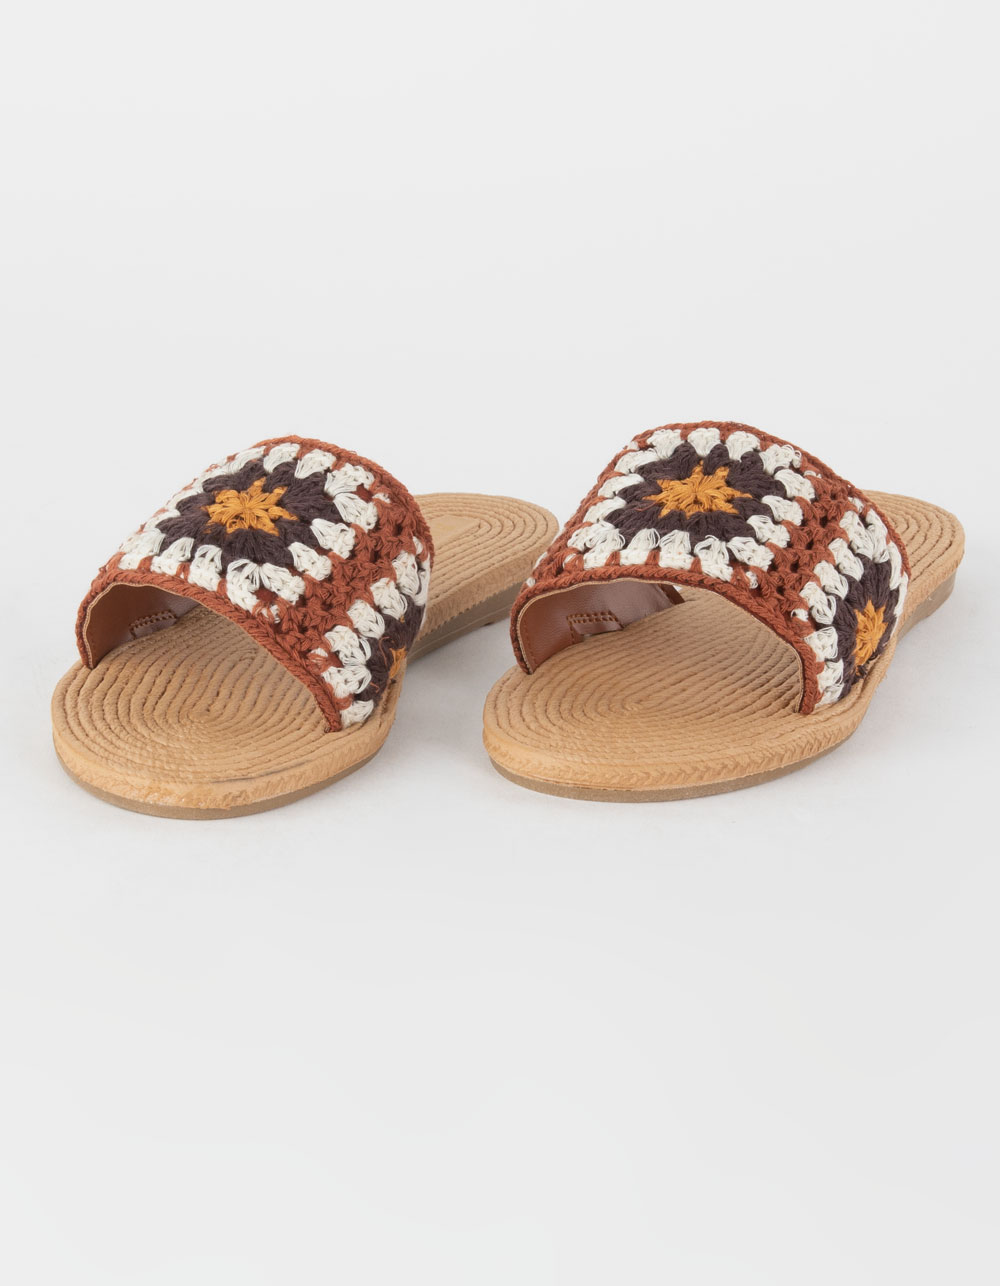 BAMBOO Athena Womens Crochet Flat Sandals - BRN/MULTI | Tillys